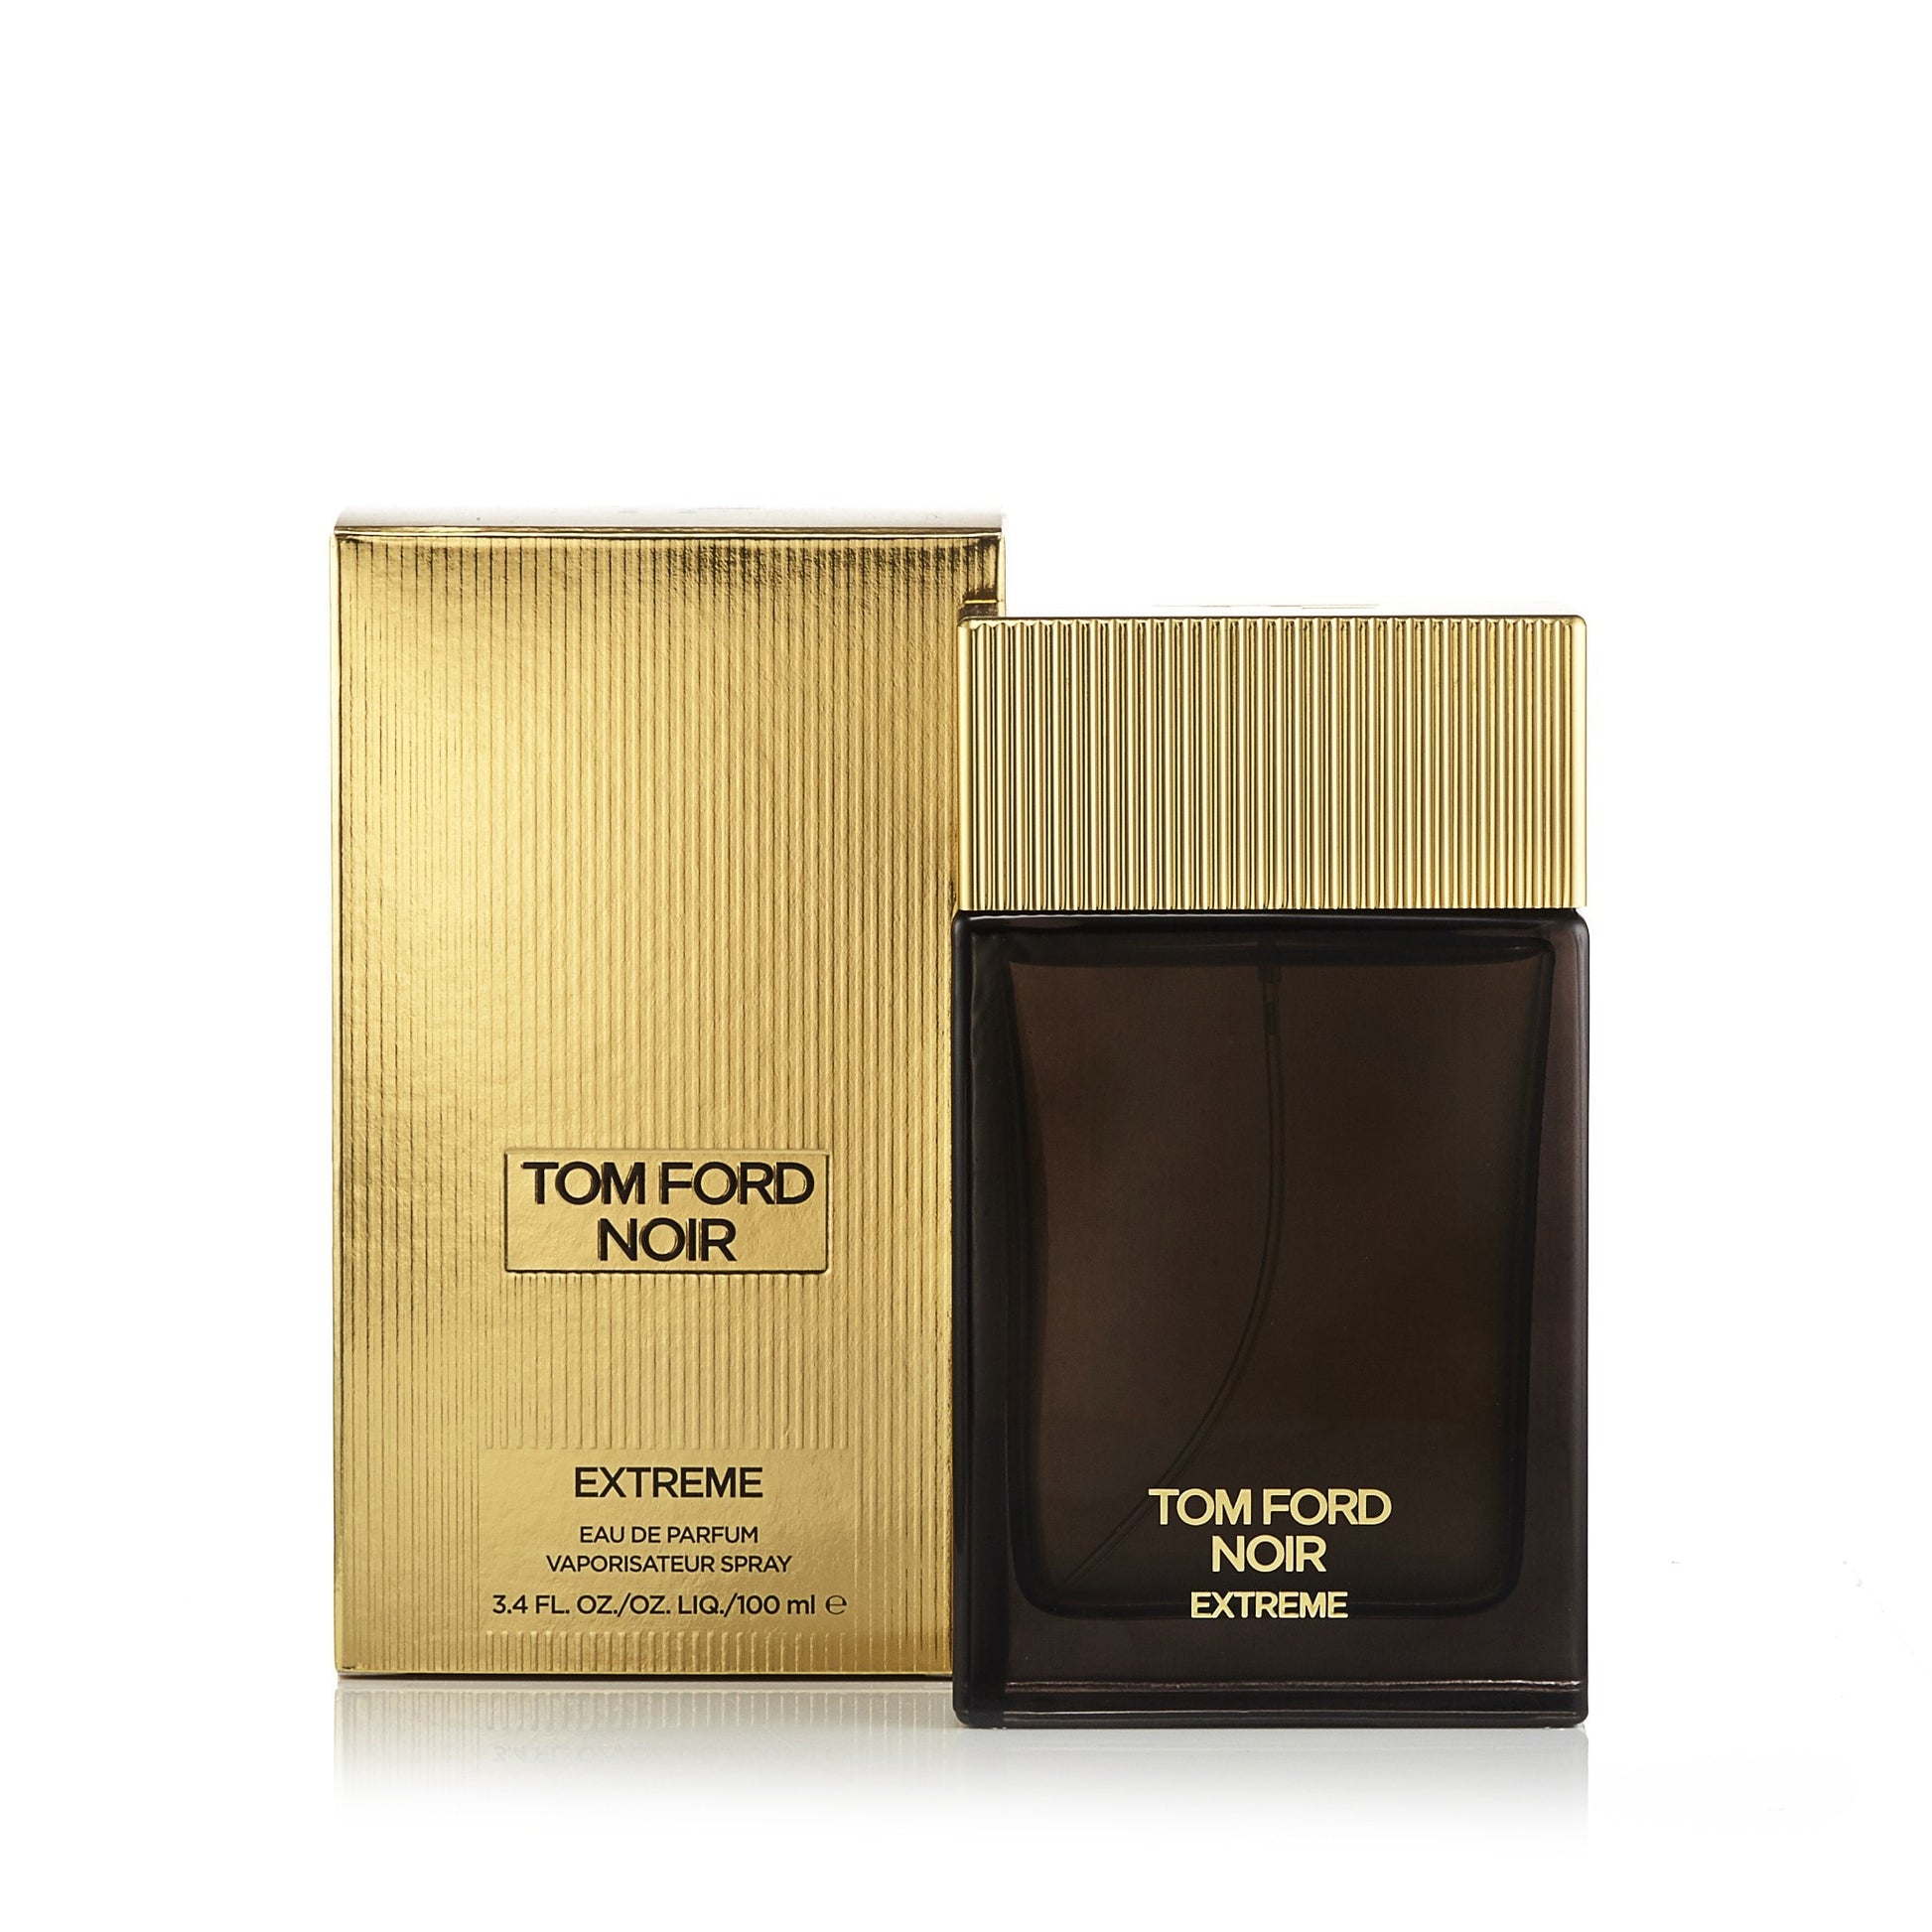 Tom Ford Noir Extreme Eau de Parfum Spray for Men by Tom Ford, Product image 1